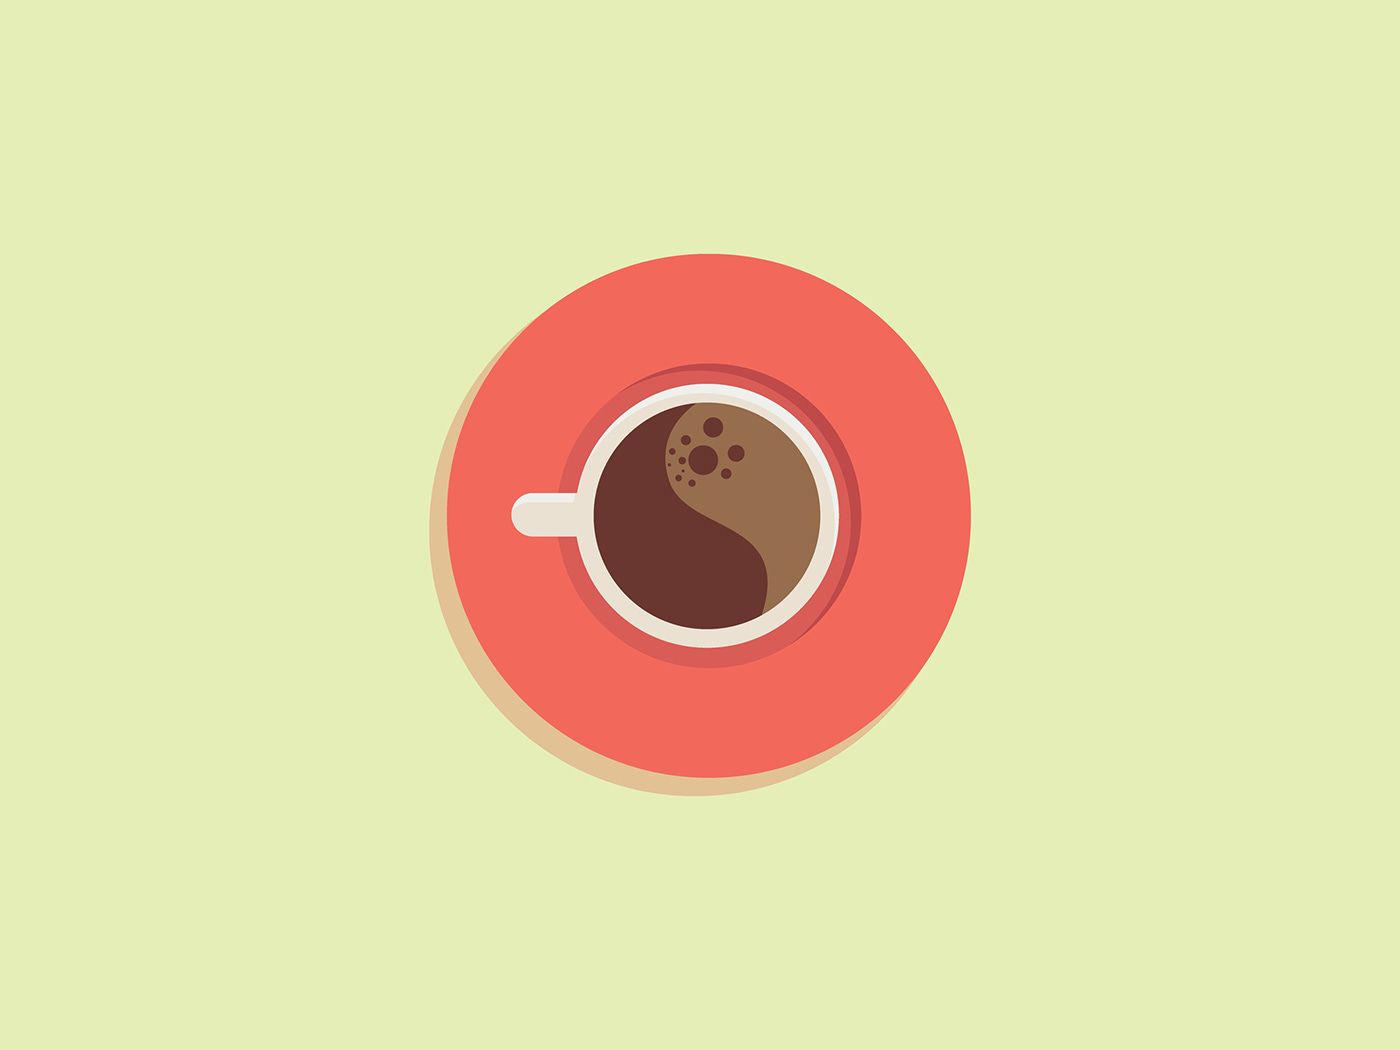 Coffee illustration on Behance